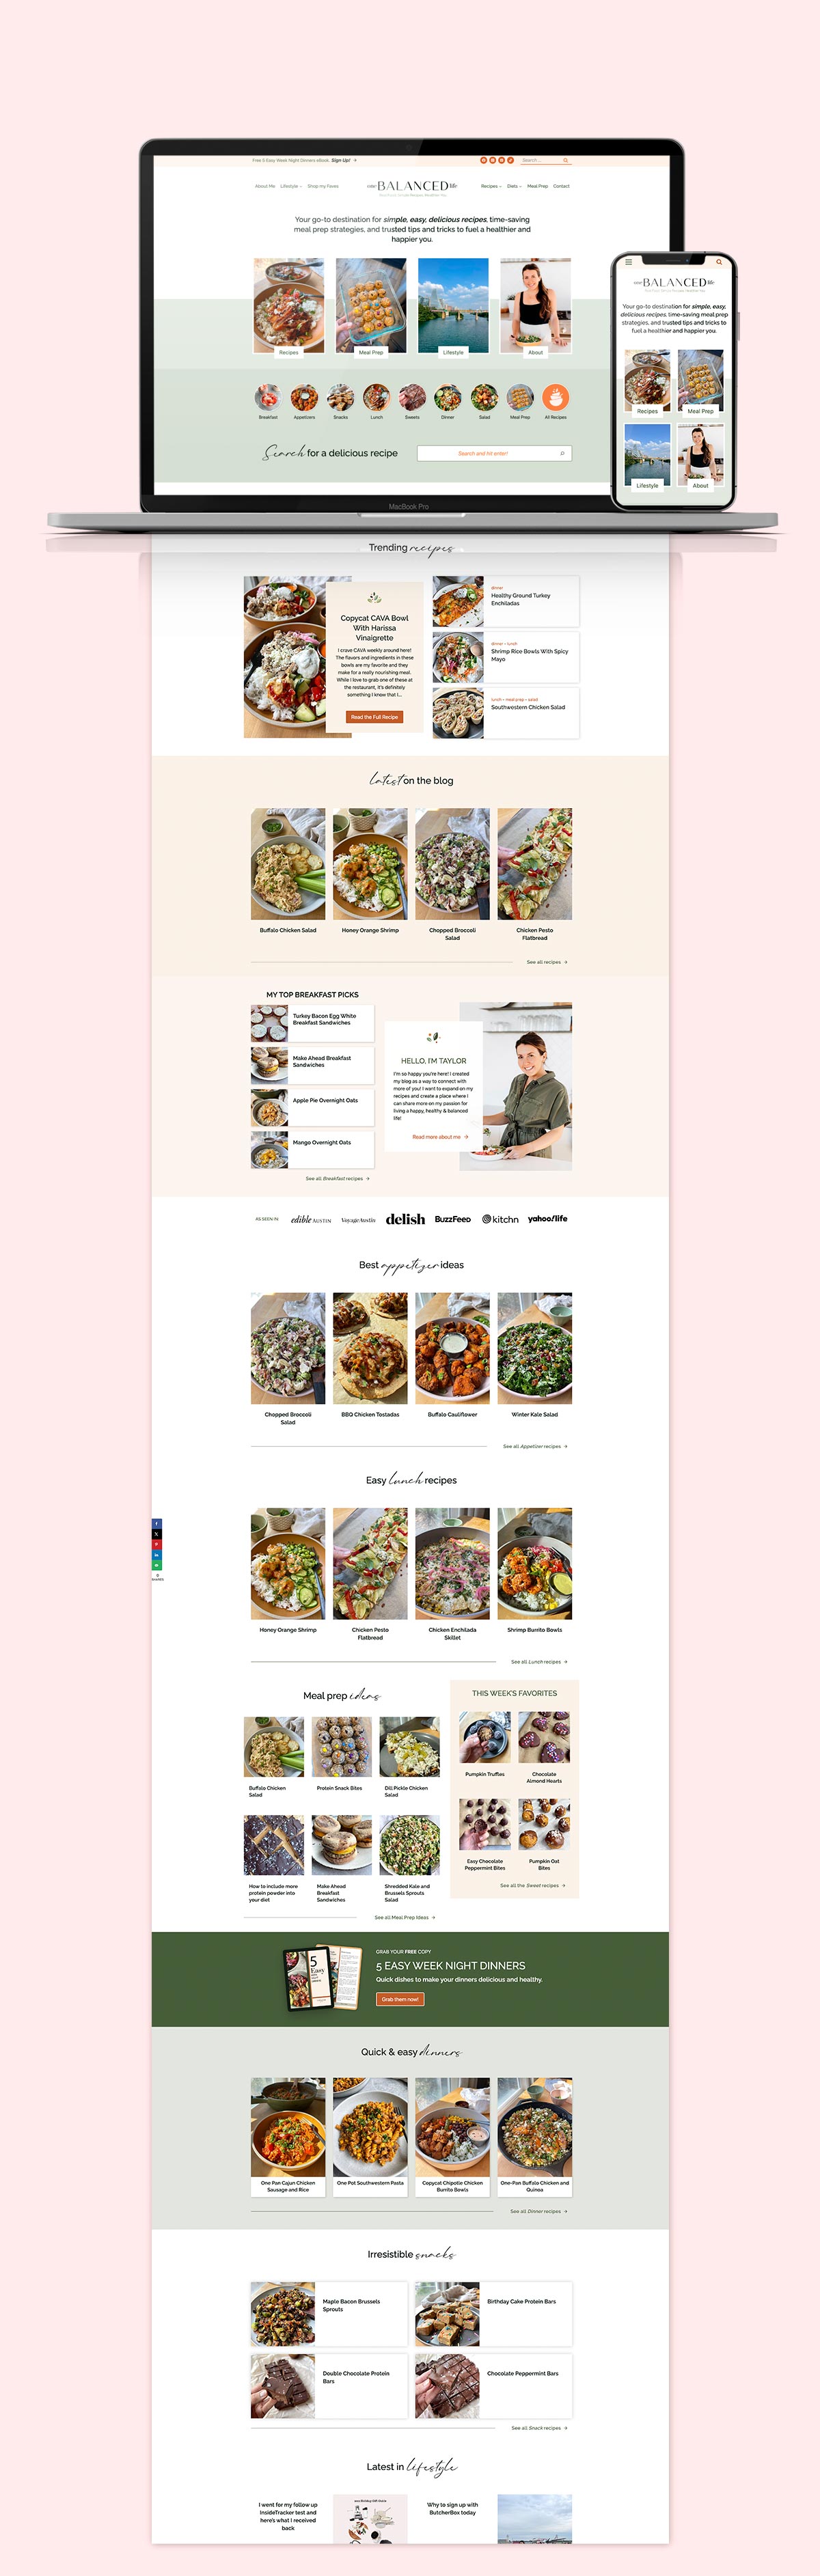 One Balanced Life Custom Website design featuring Homepage